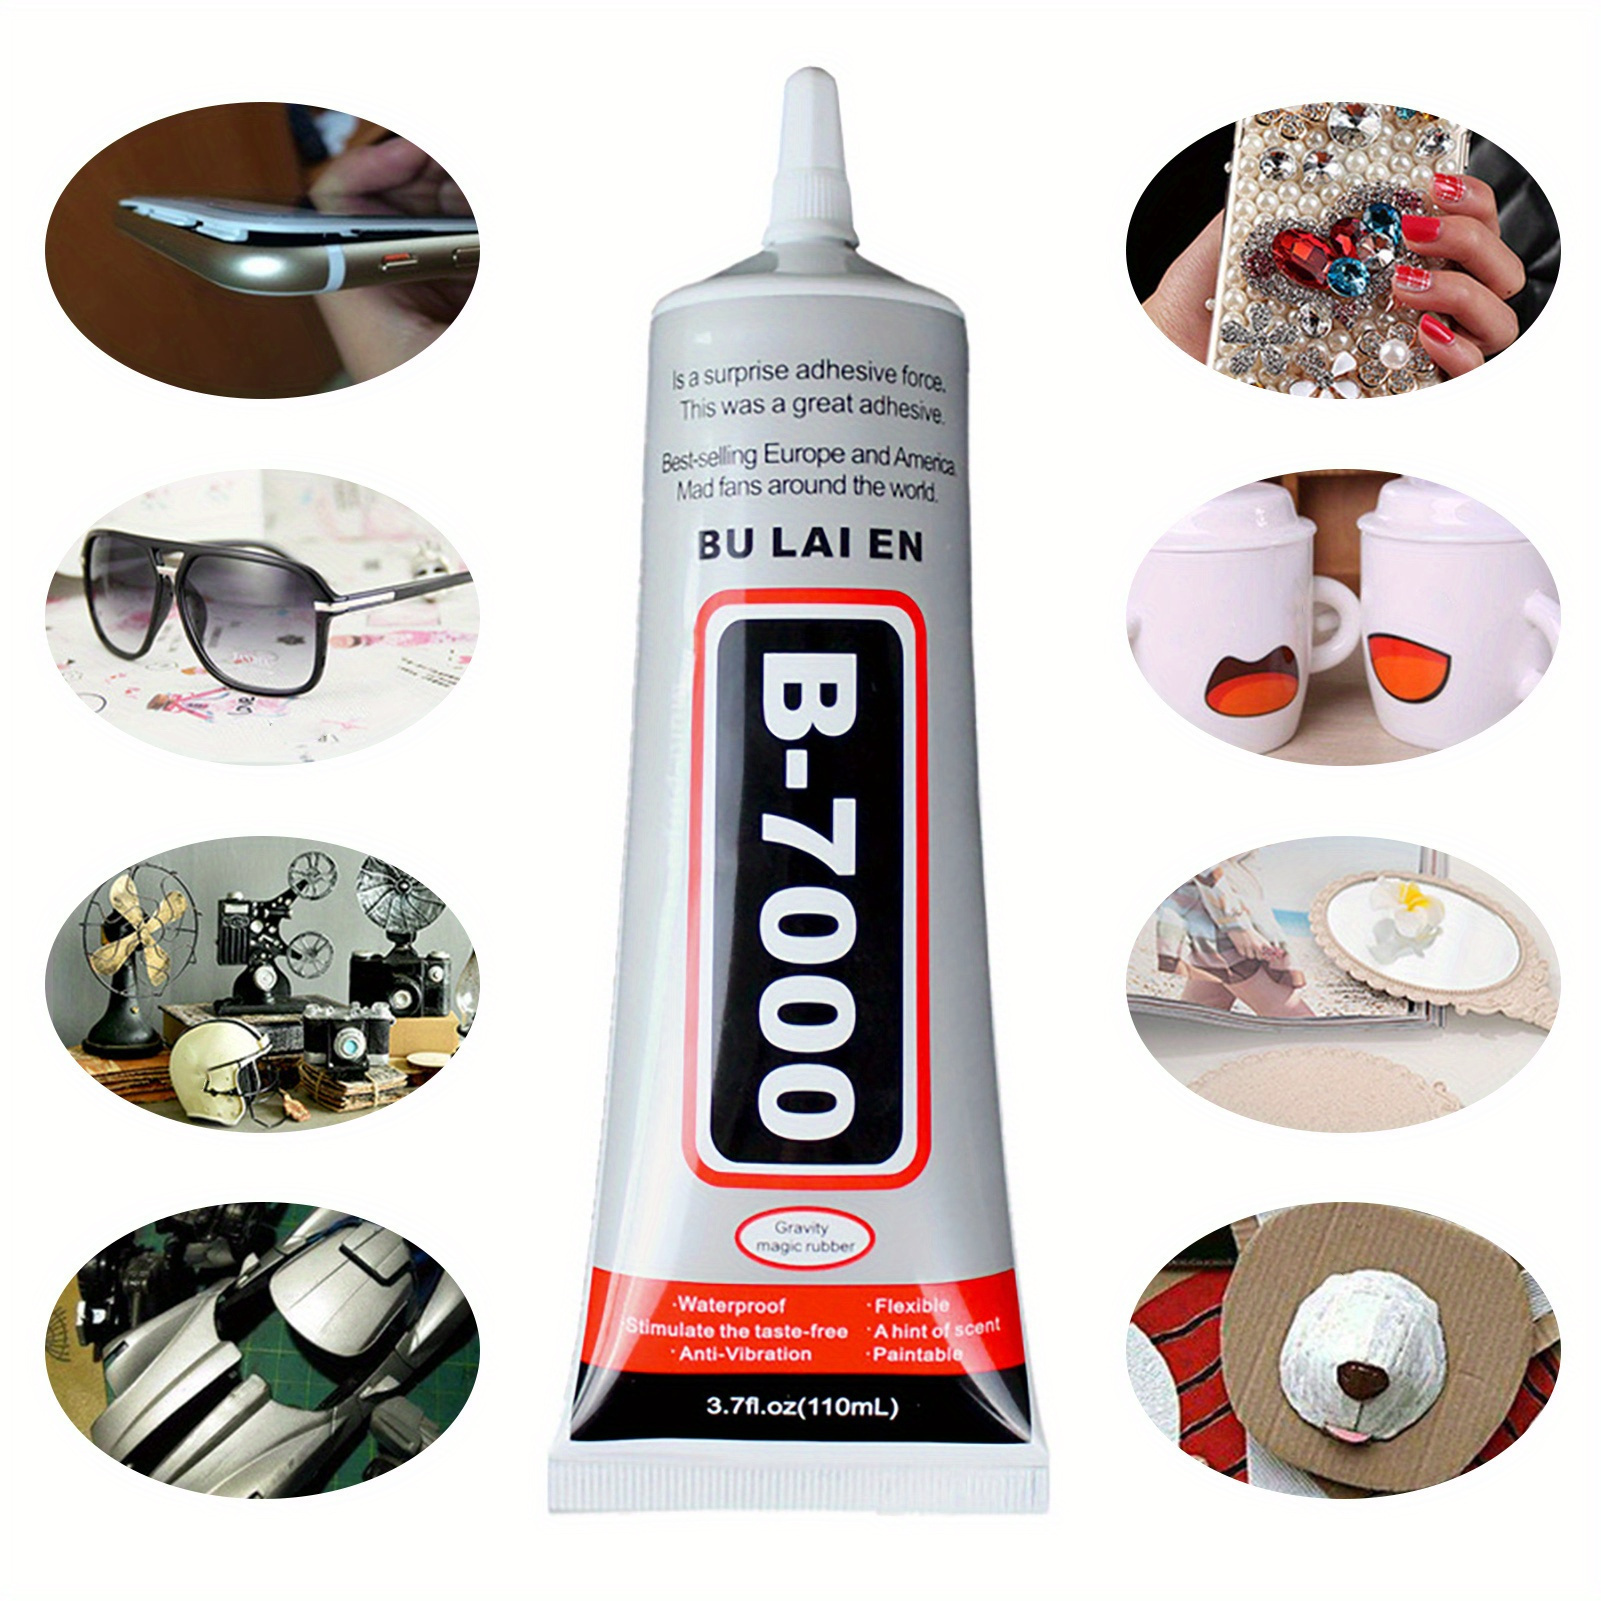 B-7000 Glue,Multipurpose High Grade Industrial B7000 Adhesive